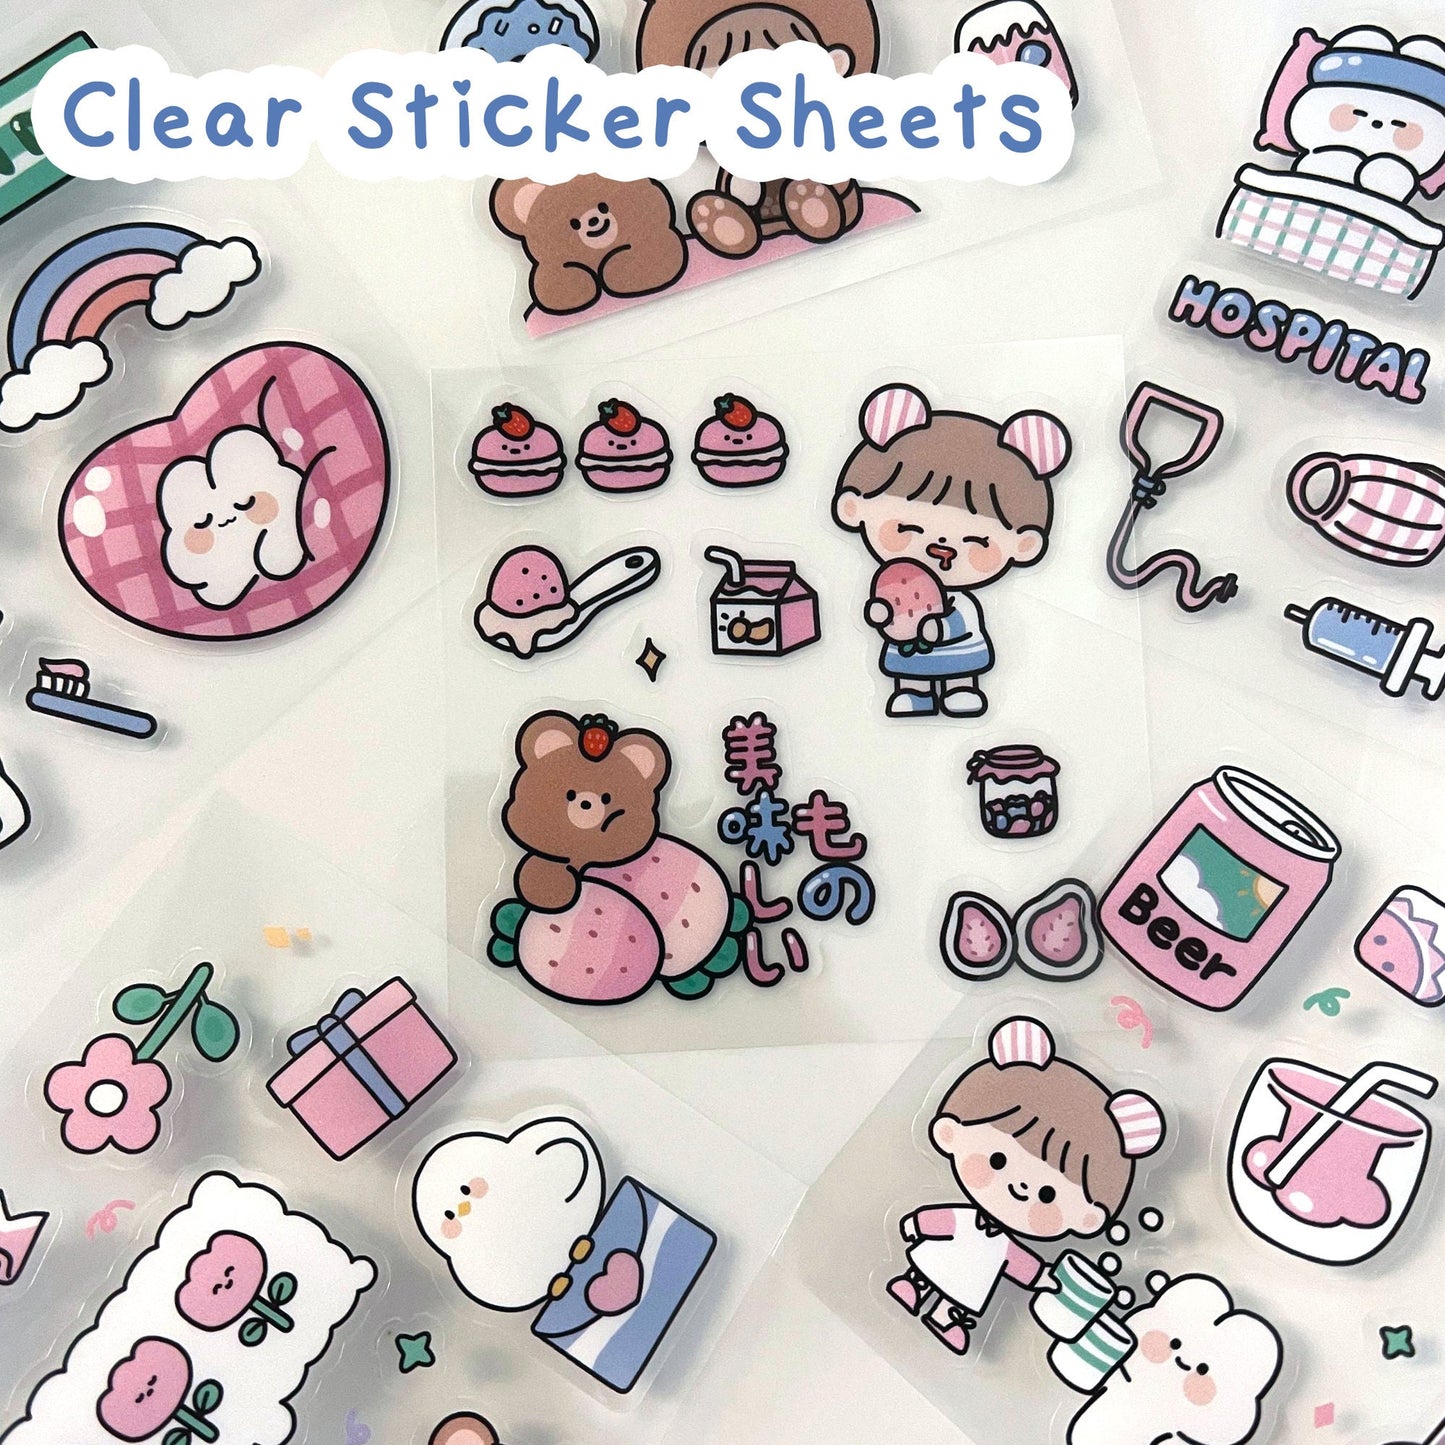 Random Kawaii Sticker Sheet Grab Bag, Mystery Sticker Sheets, Sticker Packs, Journal Stickers, Clear & Washi Stickers, Kawaii Sticker Sheets